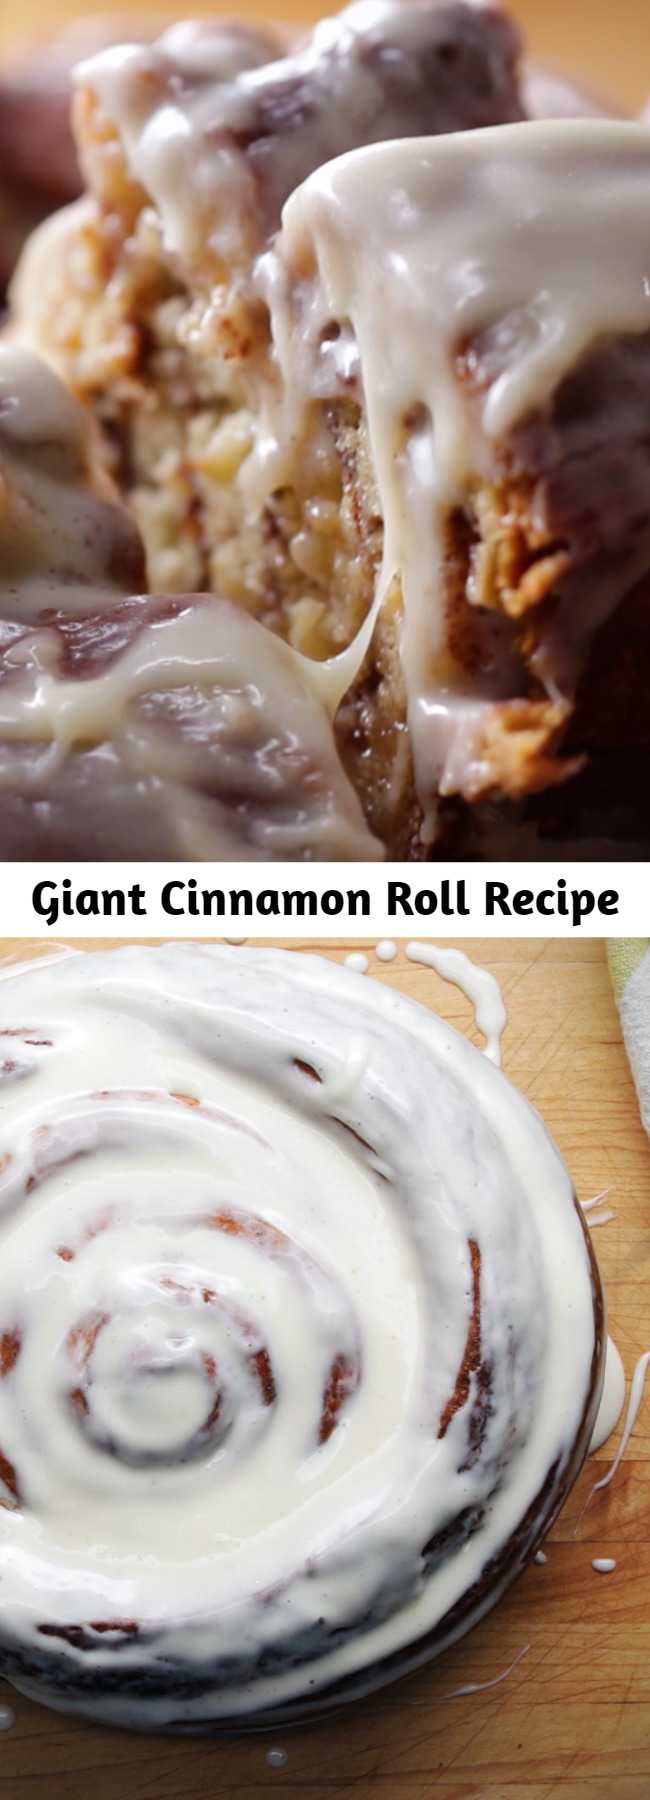 Giant Cinnamon Roll Recipe